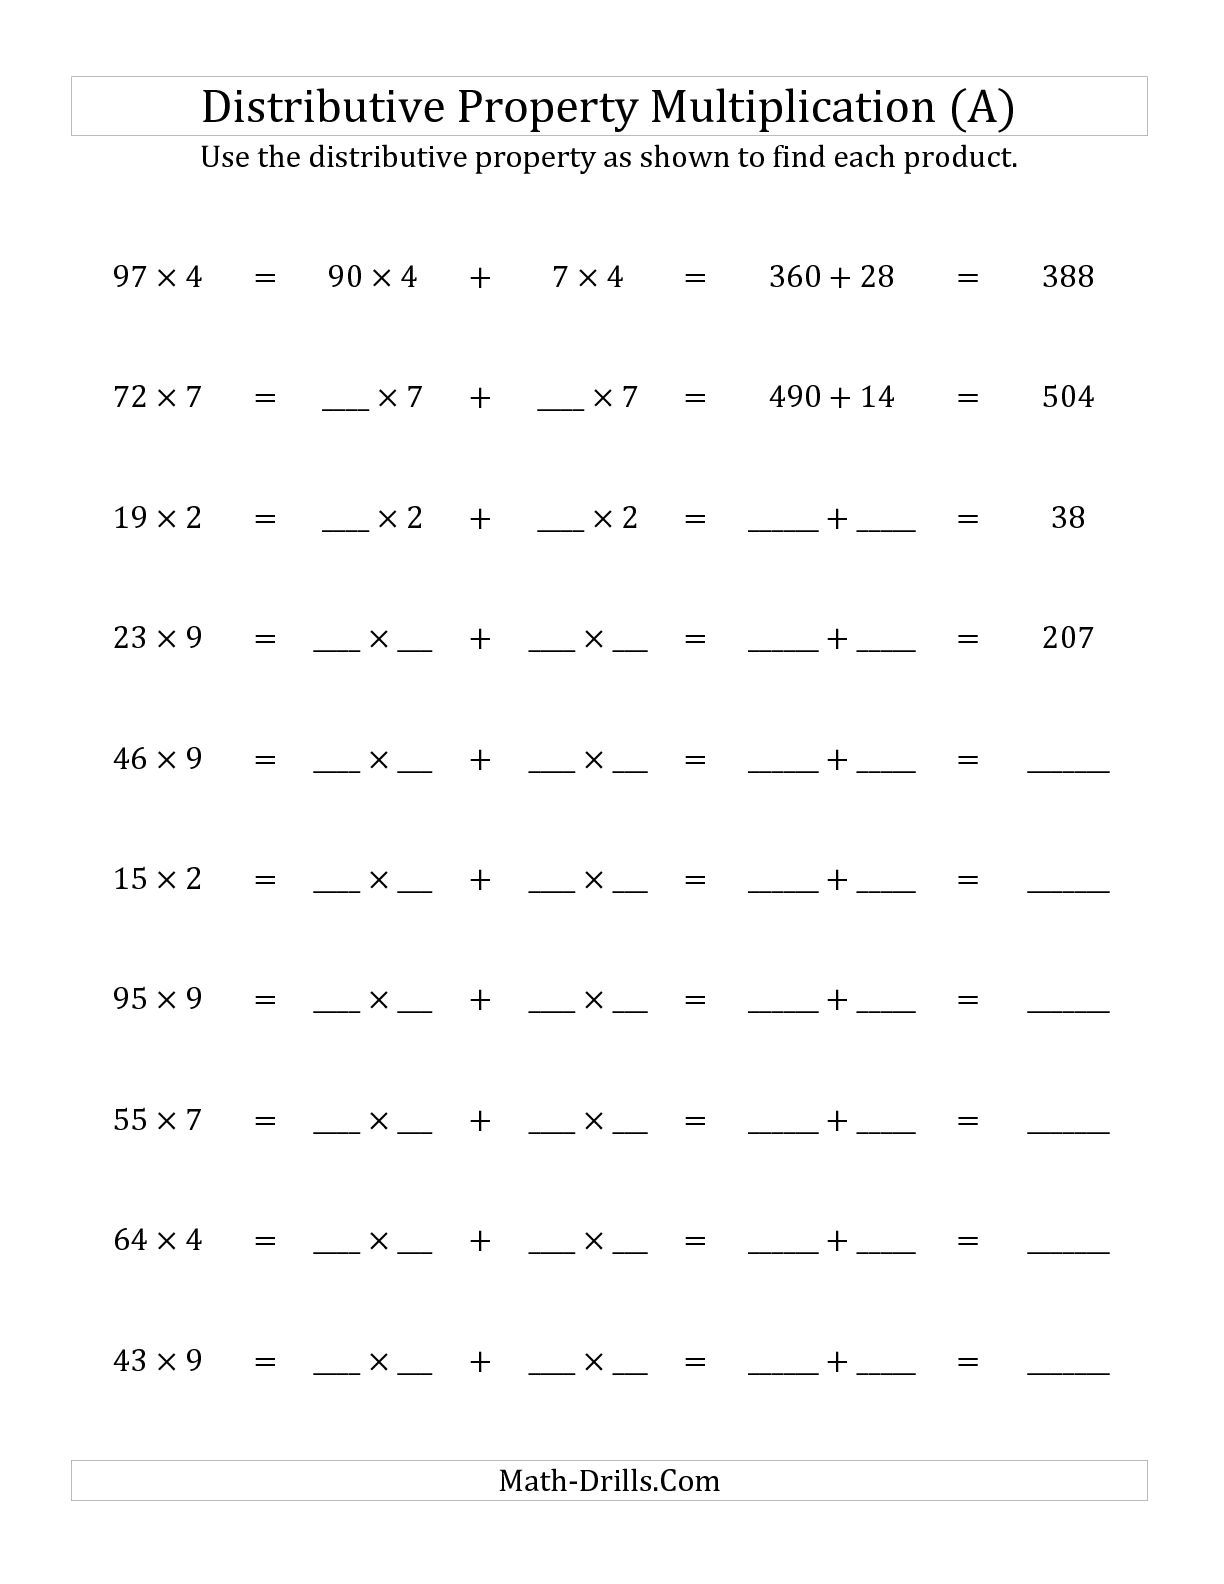 multiplication worksheets ks2 printable multiplication flash cards - multiplication worksheets ks2 year 4 printable multiplication flash cards | multiplication worksheets ks2